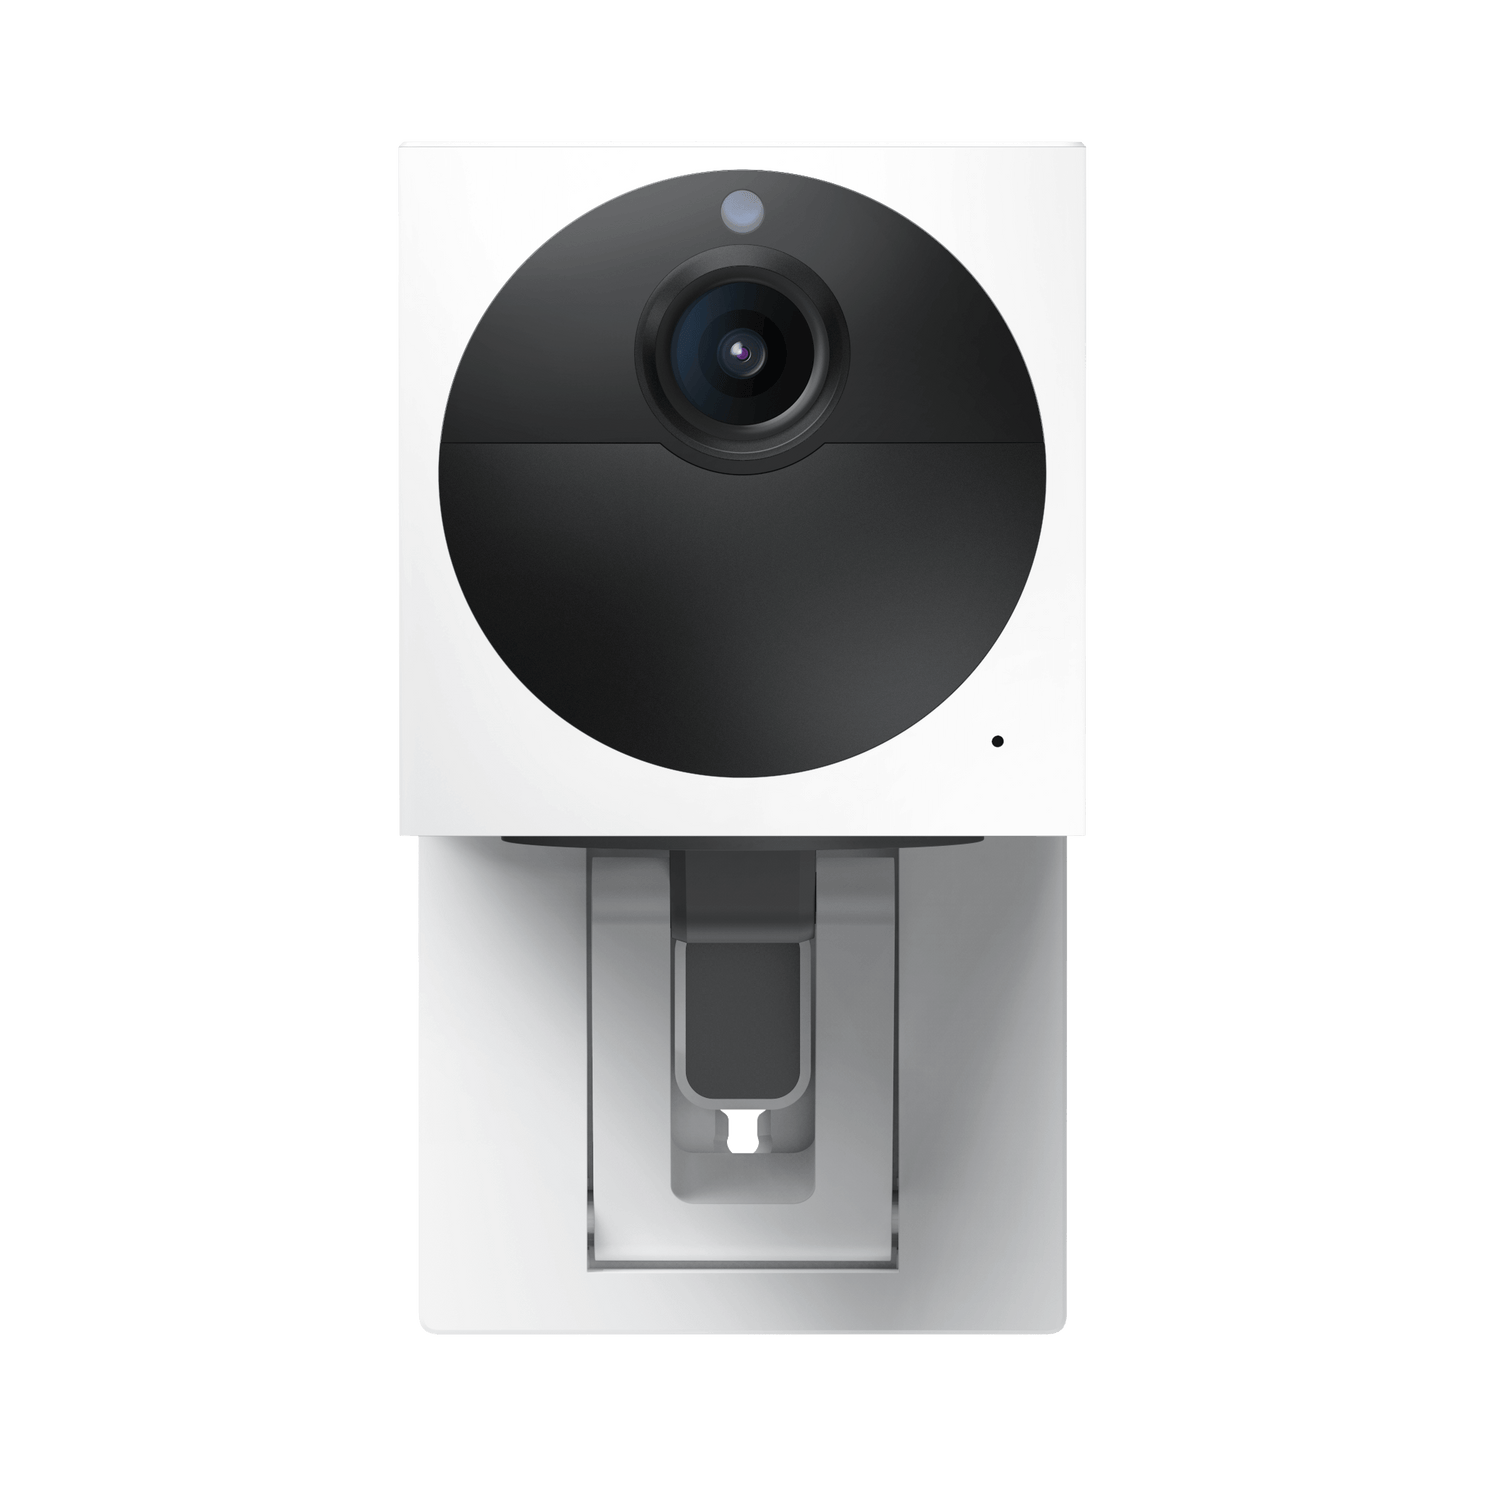 Brug af en computer skæg krabbe Wireless Outdoor Surveillance Home Security Camera | Wyze